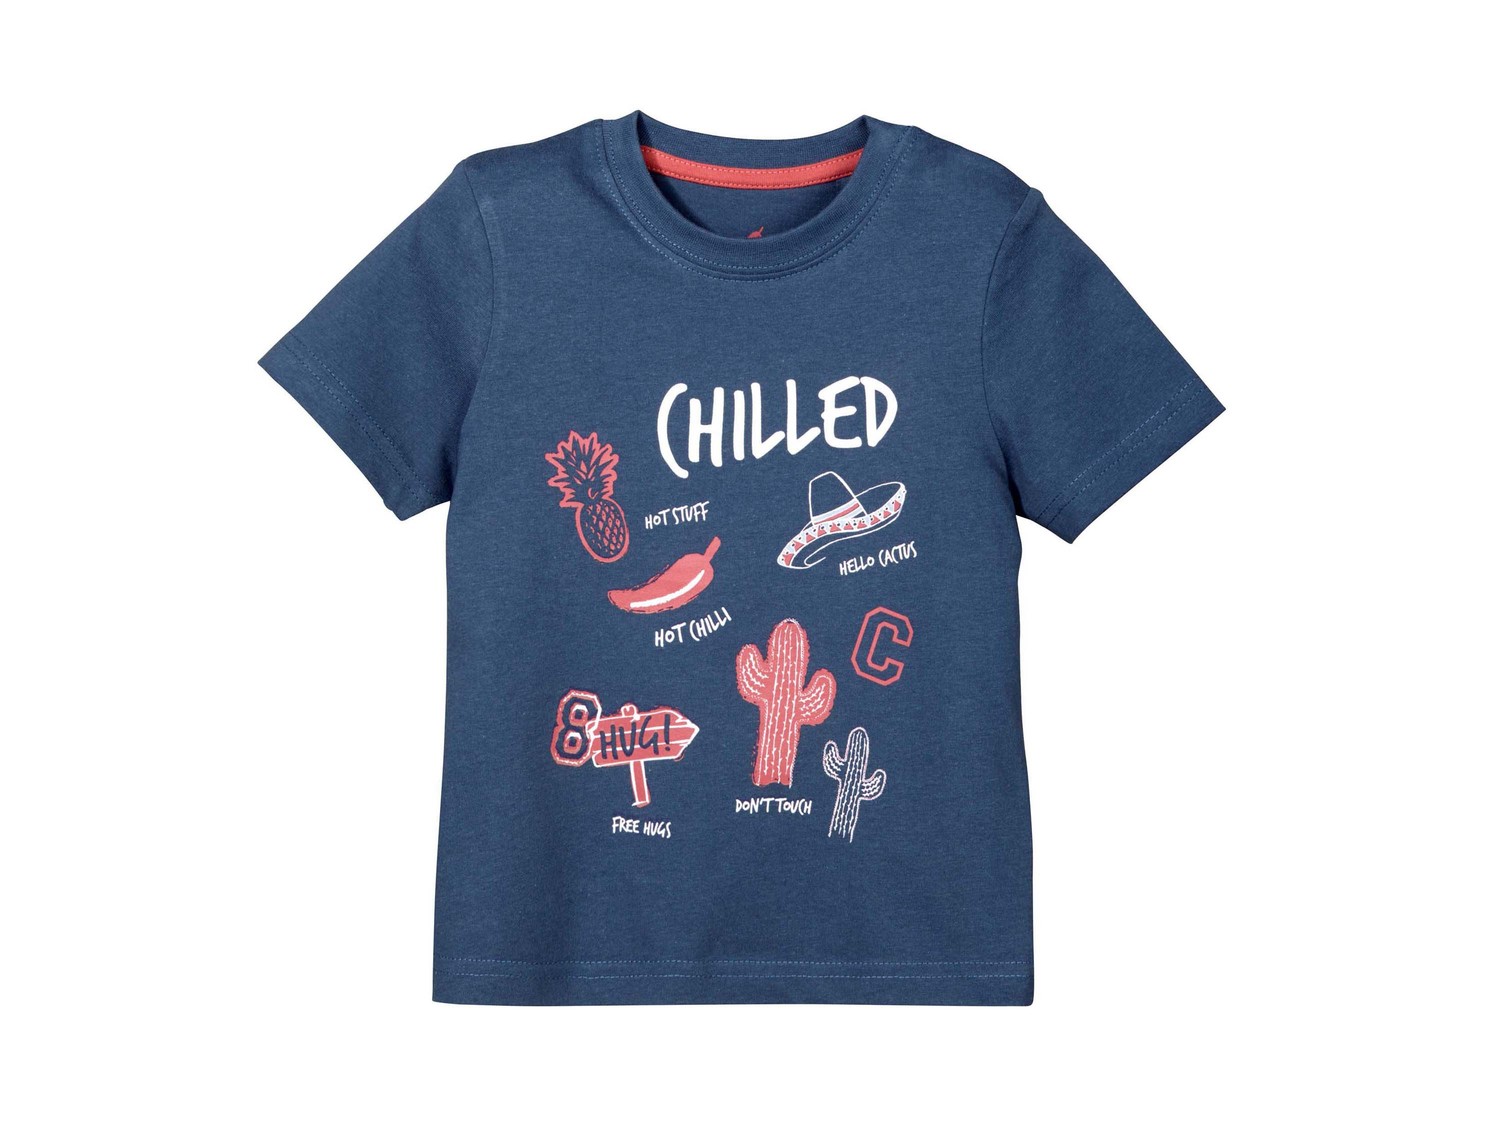 T-shirt da bambino, 3 pezzi Lupilu, prezzo 5.99 &#8364; 
Misure: 1-6 anni
- ...